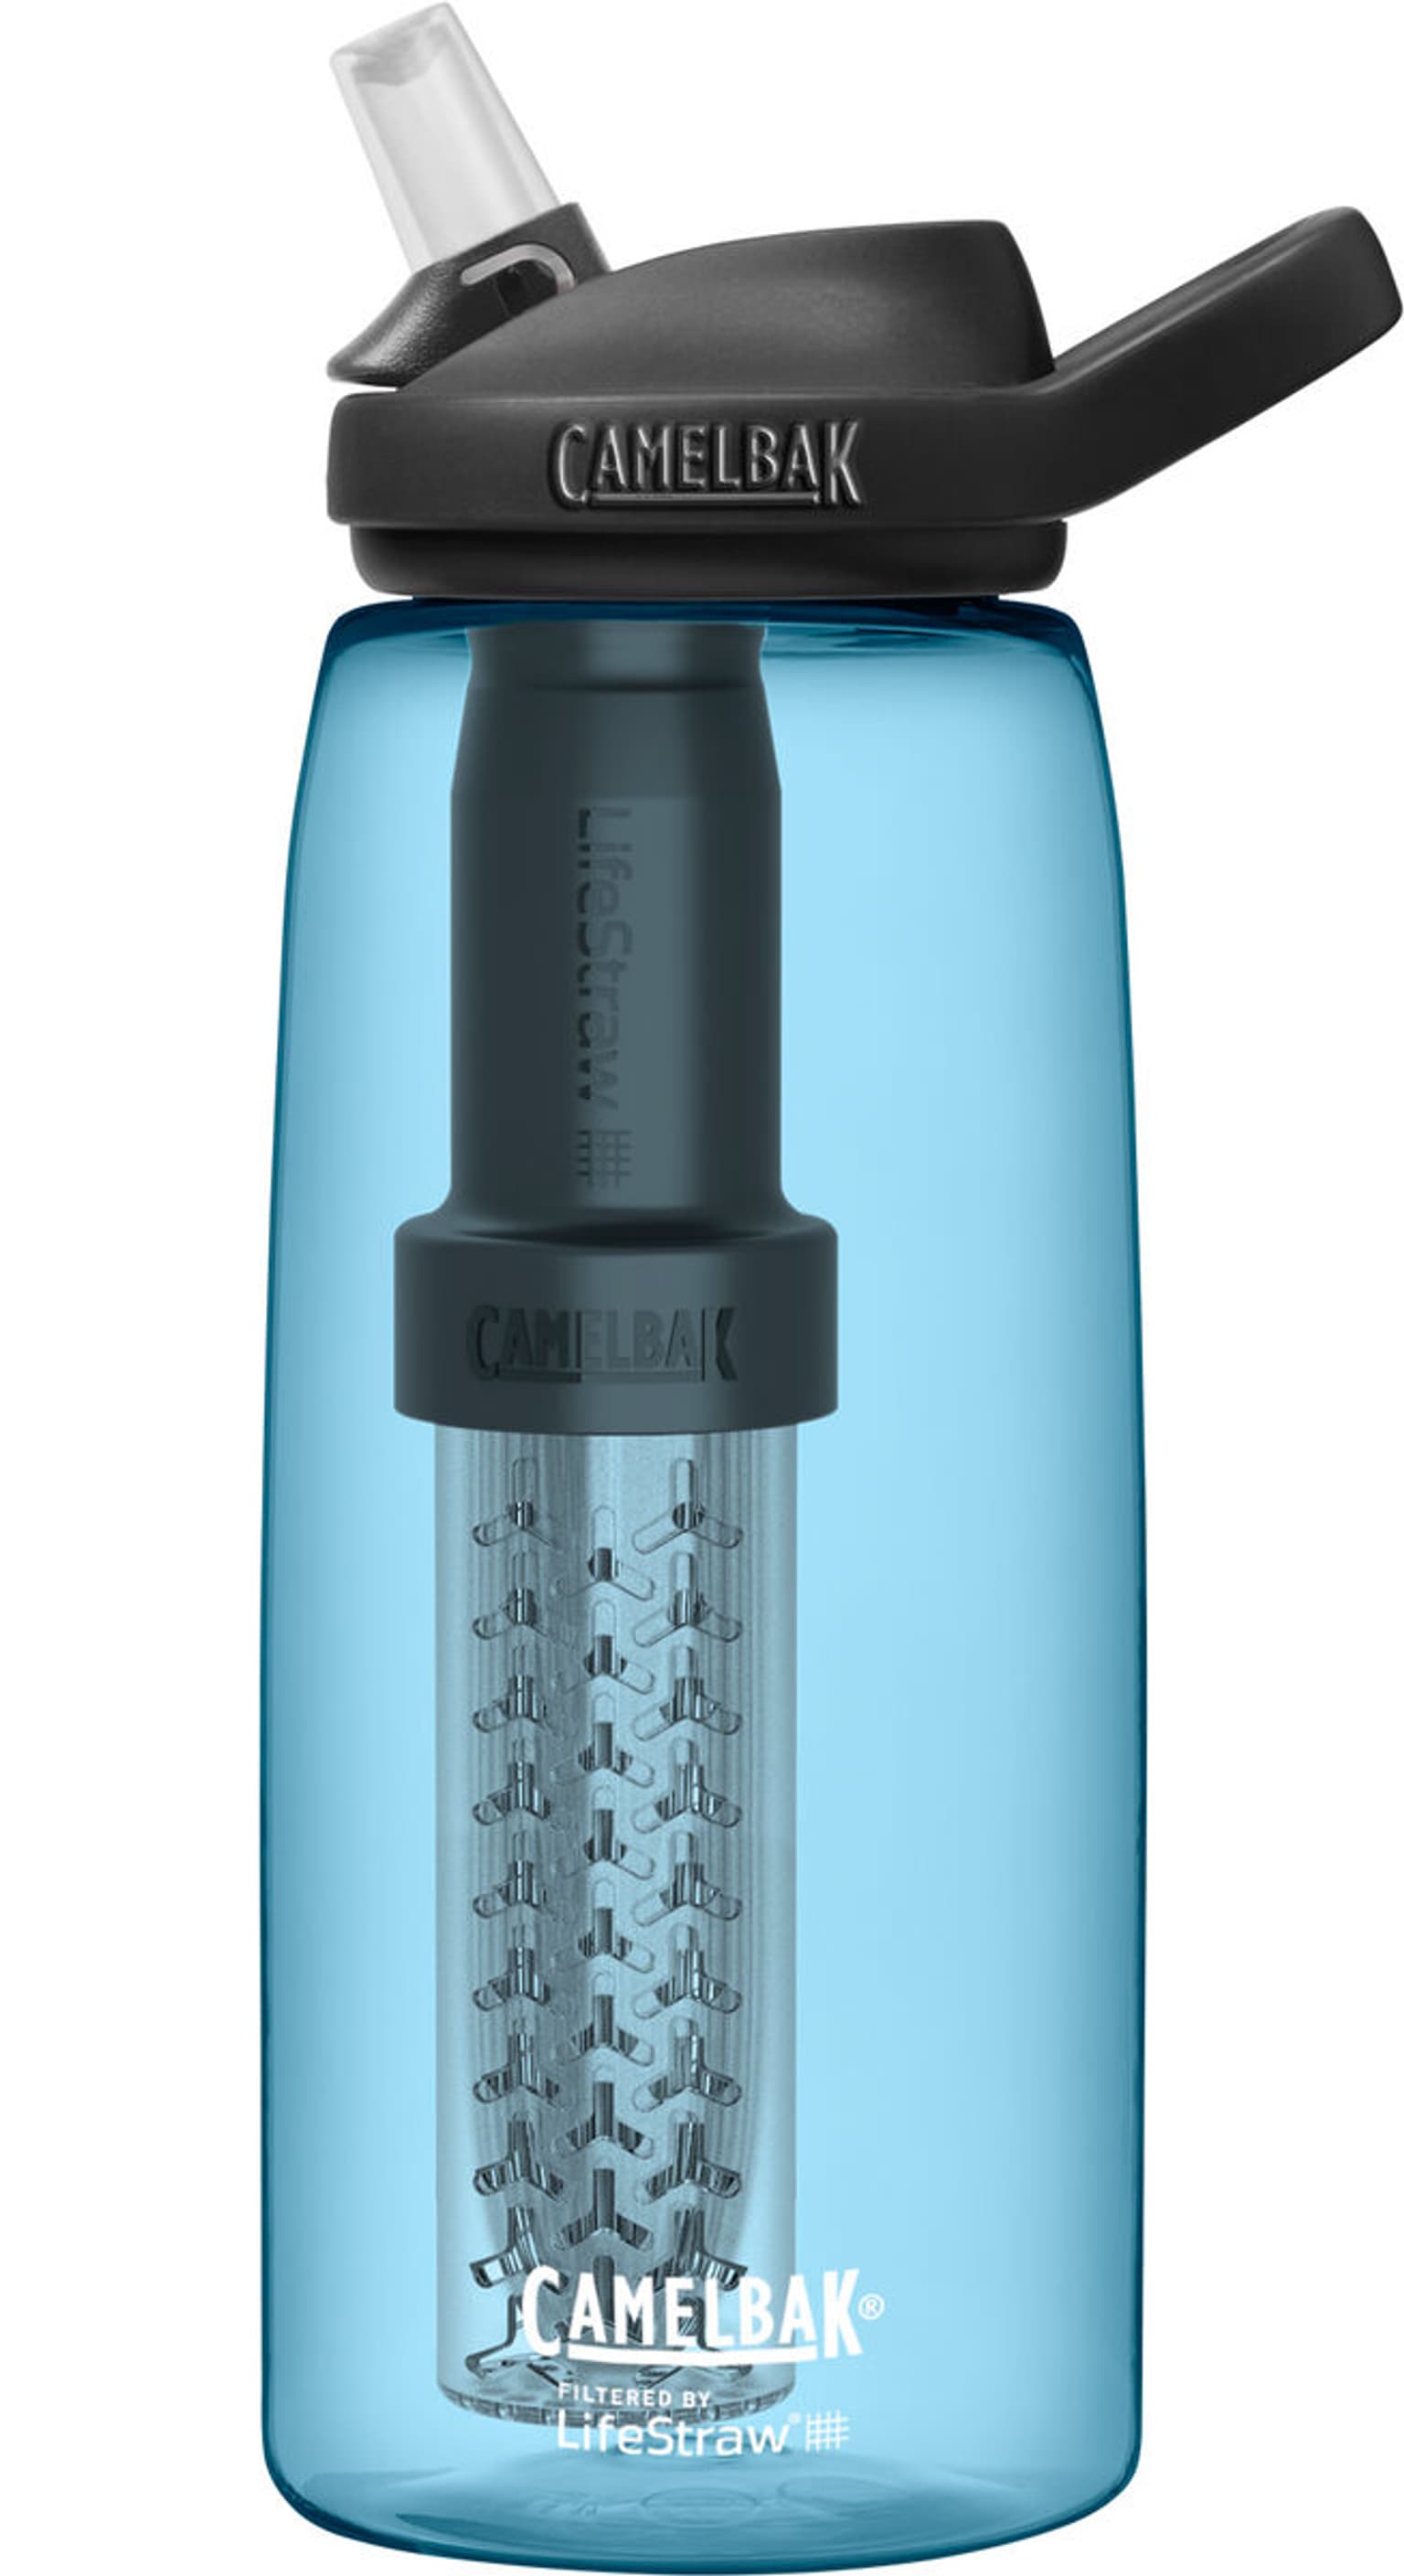 Camelbak Camelbak Eddy+ Bottle Lifestraw 1.0l Wasserfilter blu 1